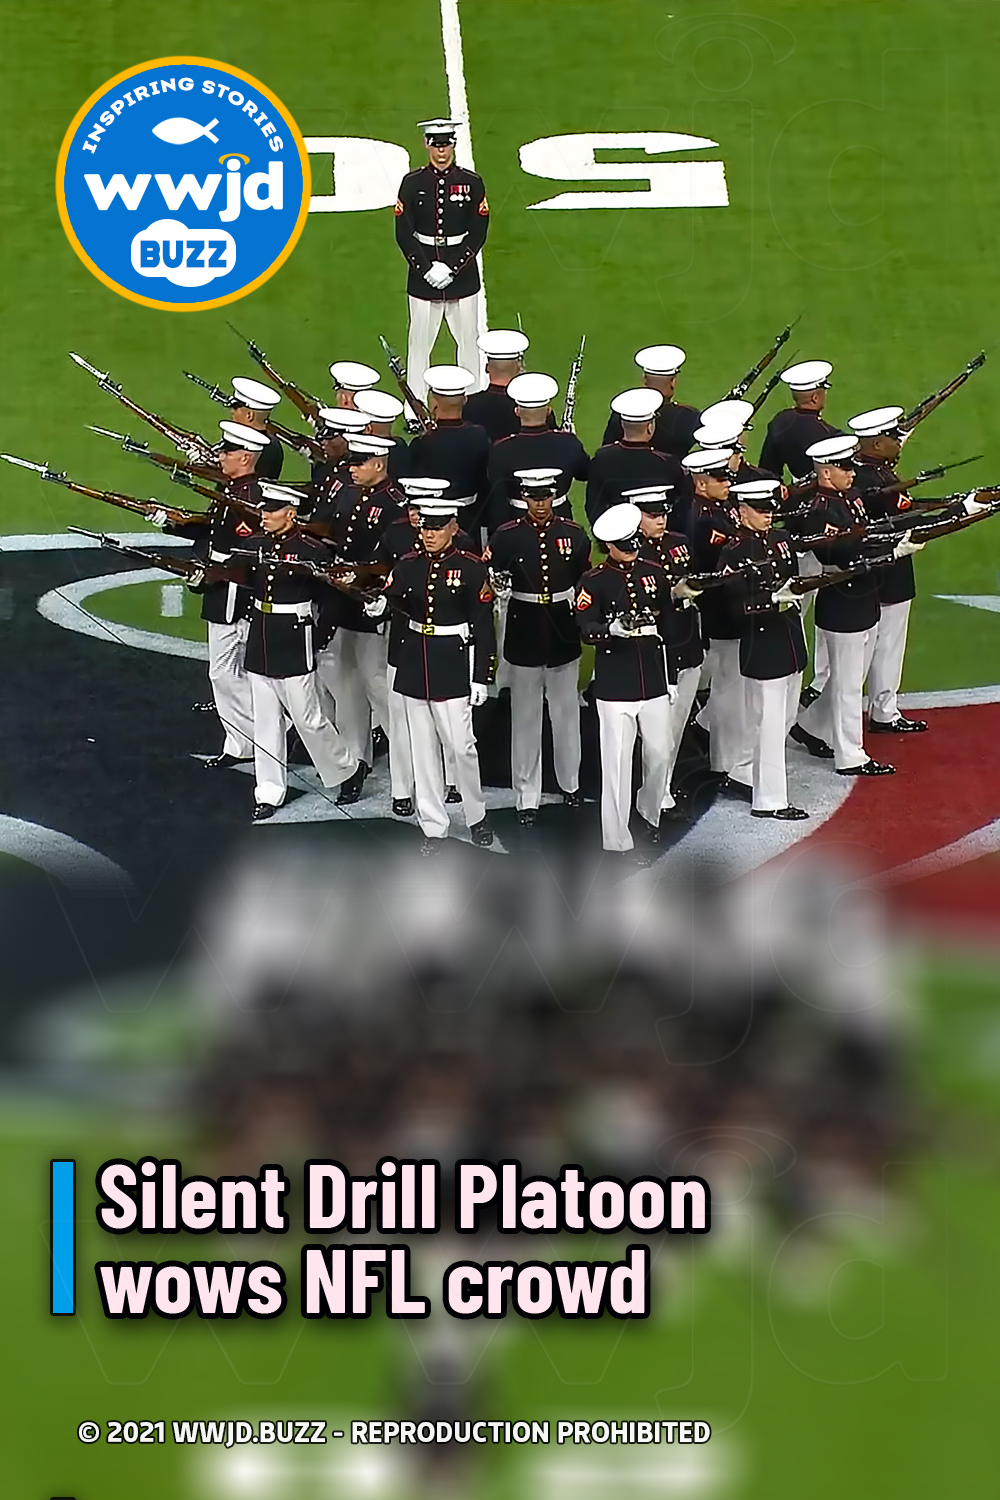 Silent Drill Platoon wows NFL crowd